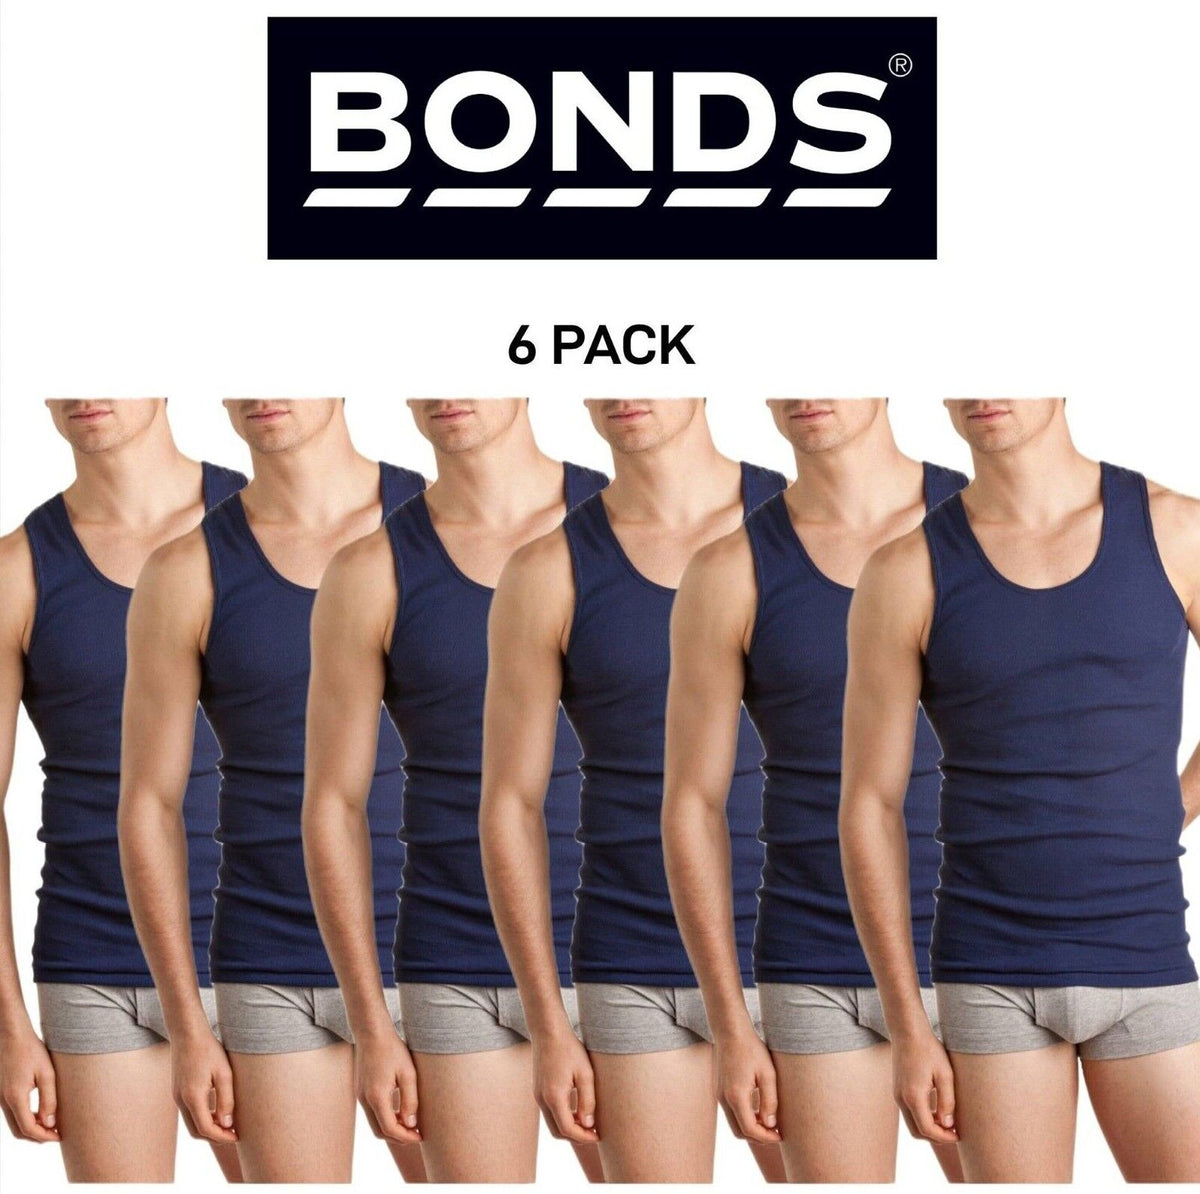 Bonds Mens Chesty Singlets Super Soft Cotton Breathable Seamfree 6 Pack M7NLO